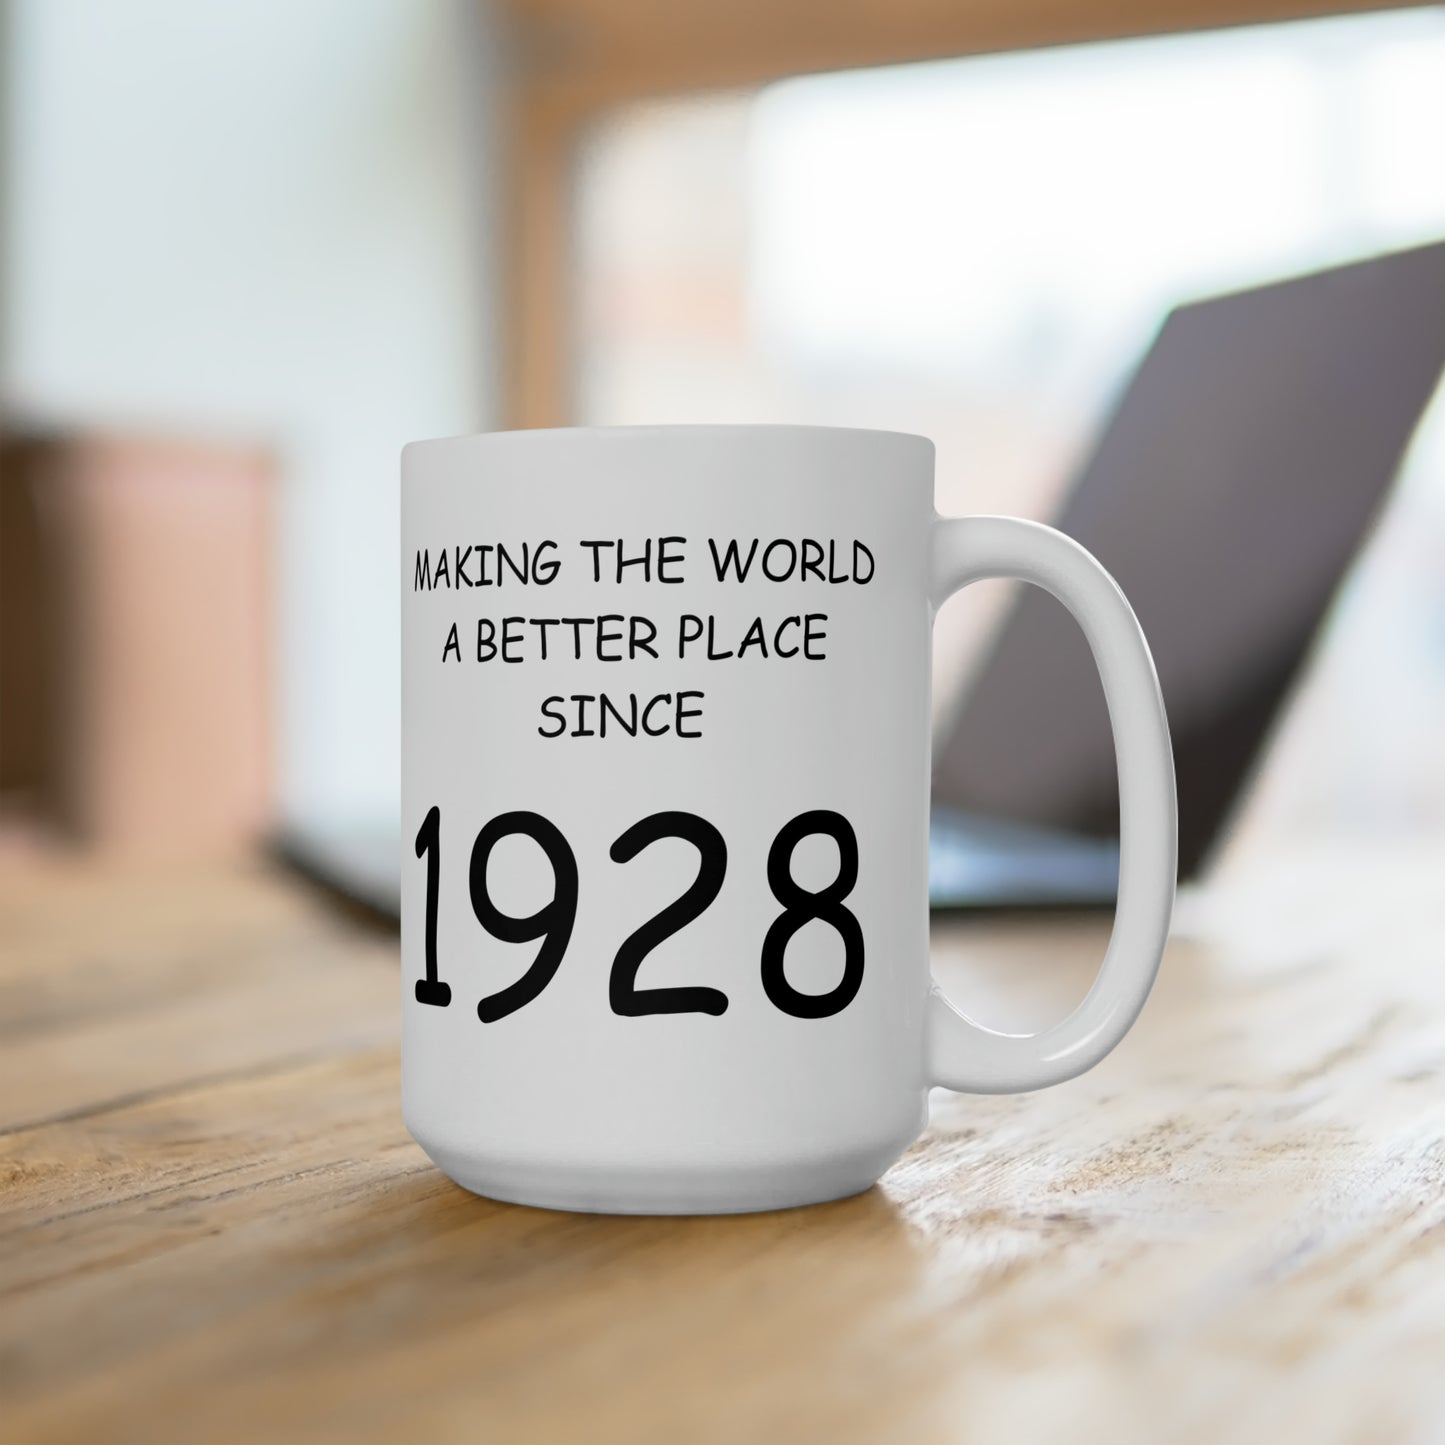 Making the World Better Place SInce 1928, Ceramic Mug 15oz